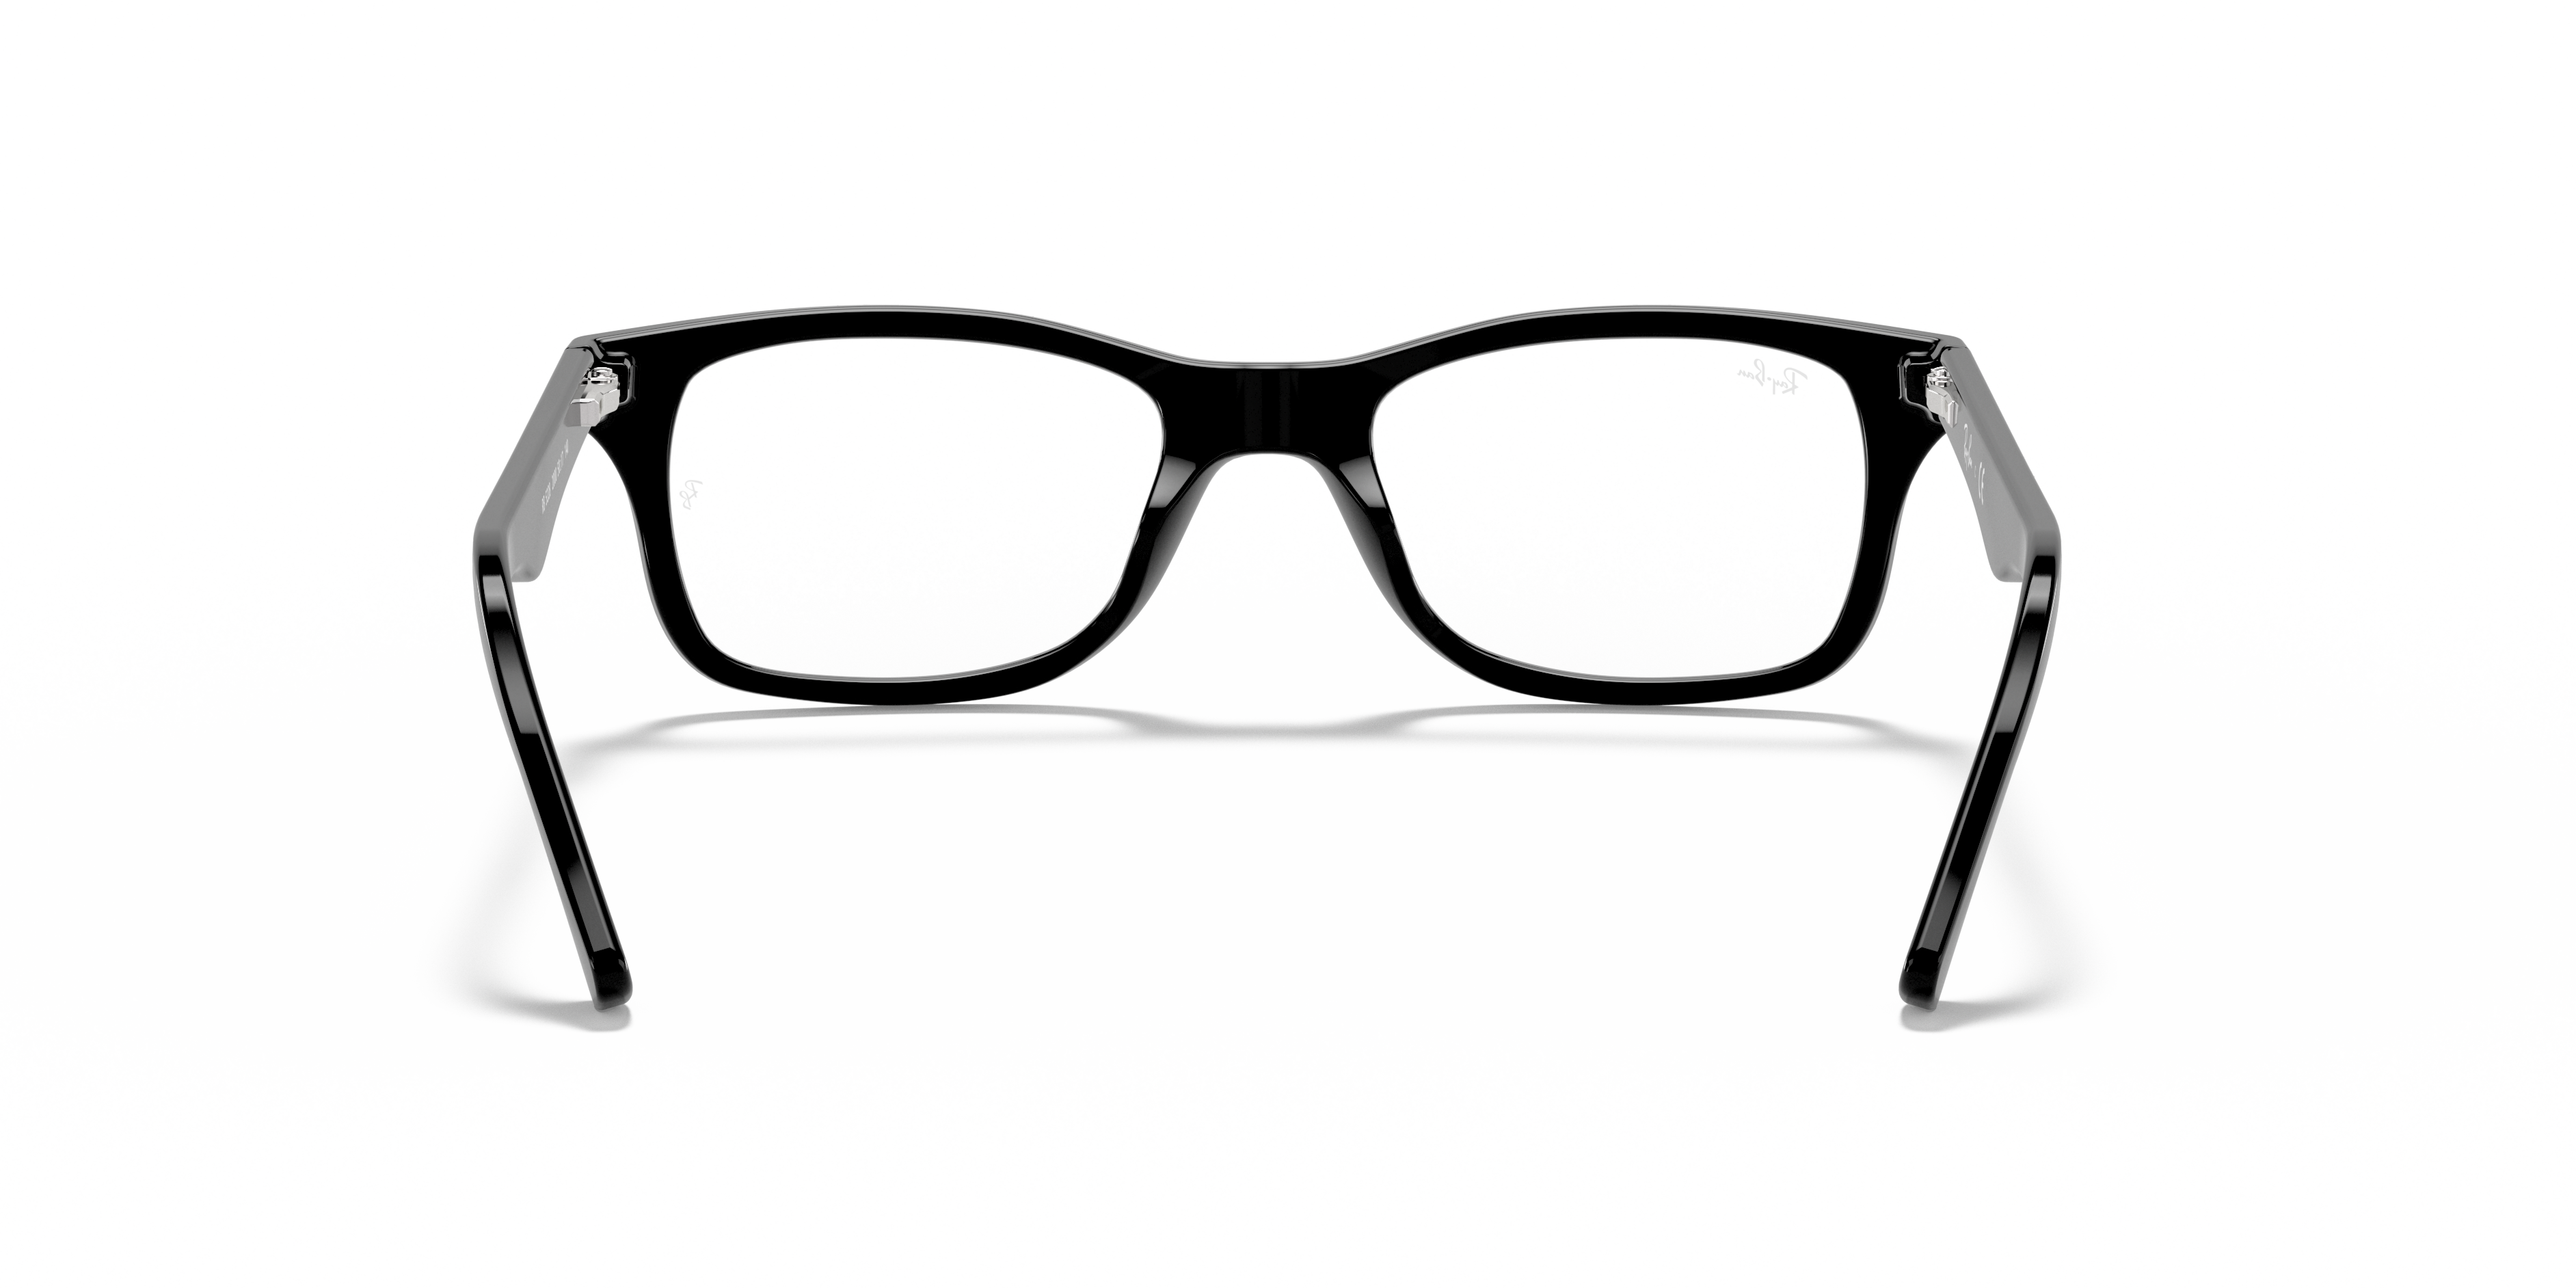 Rb5228 Eyeglasses with Black Frame | Ray-Ban®